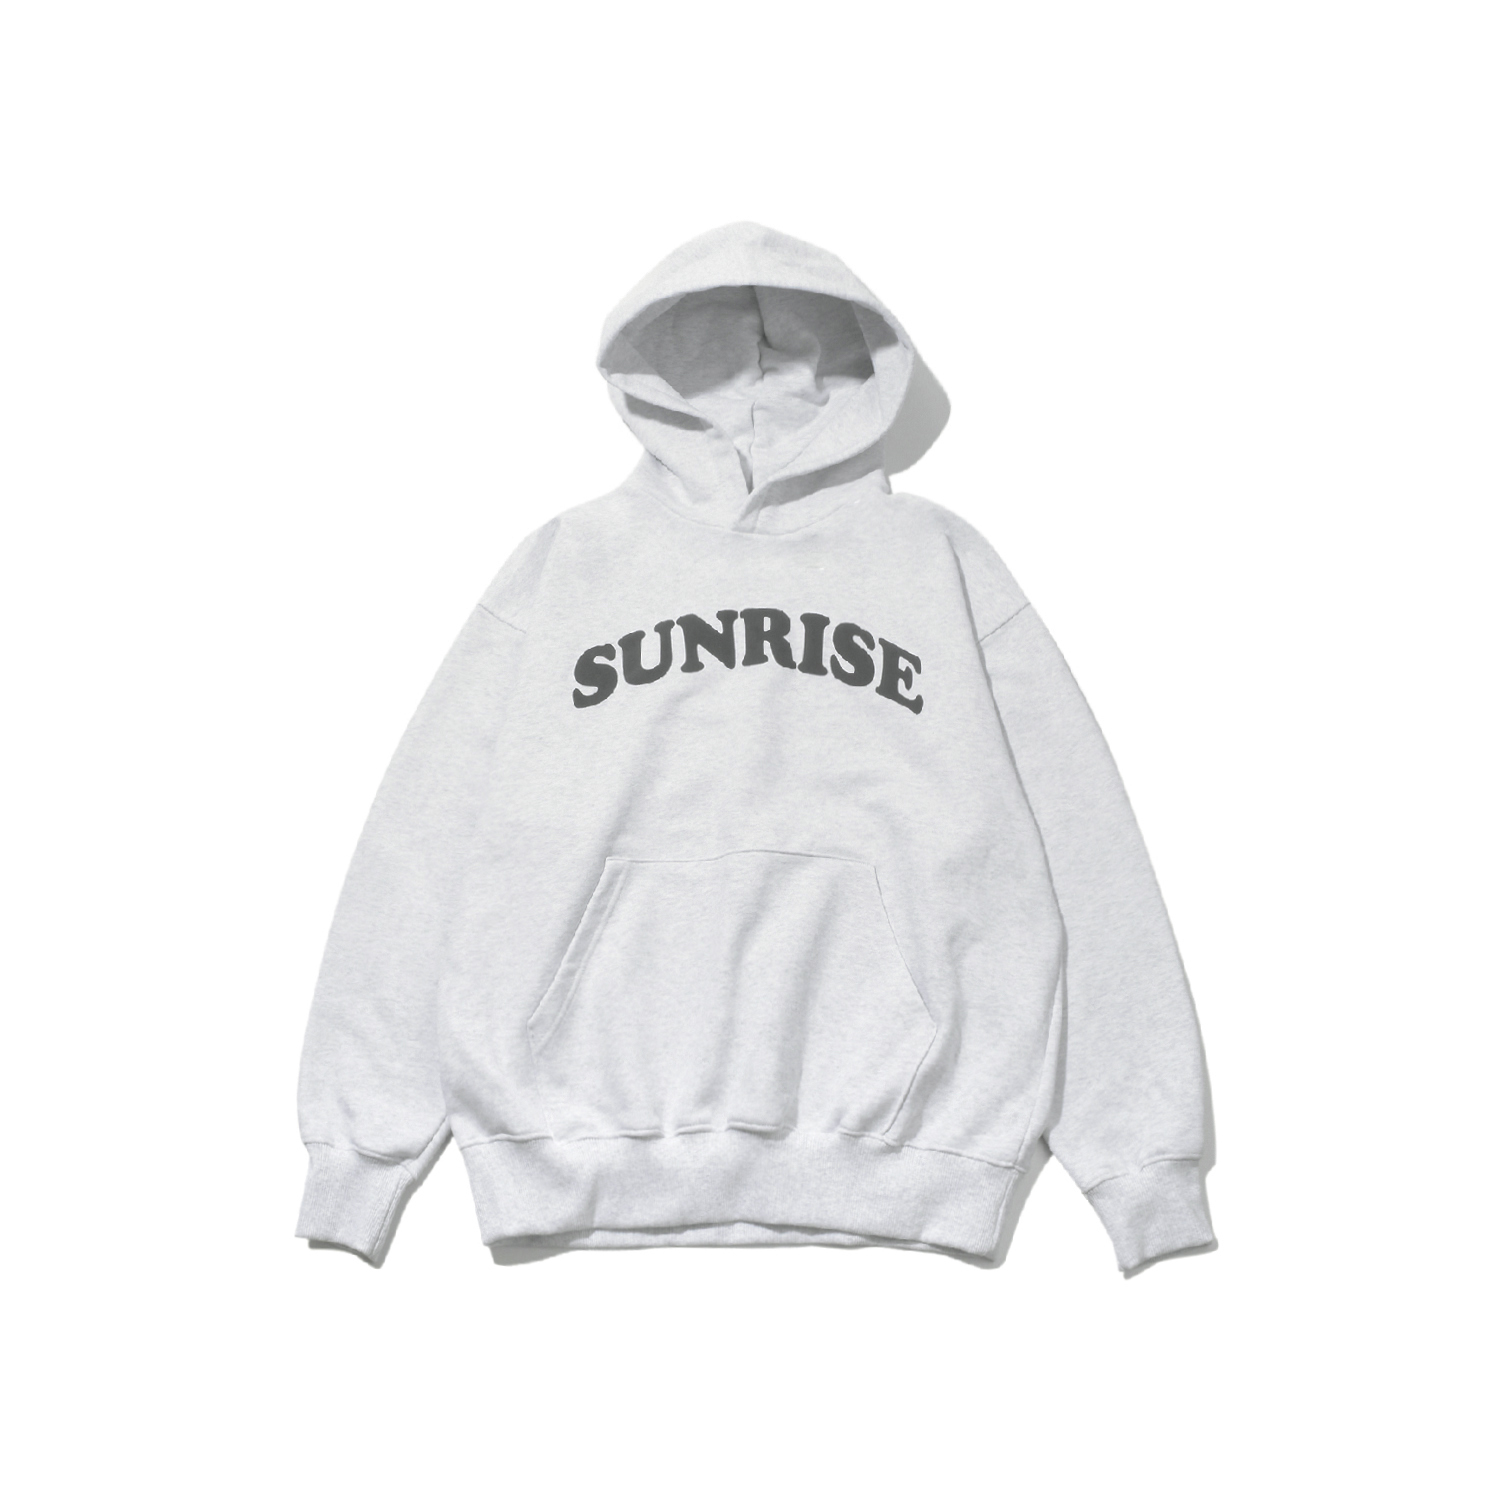 Sunrise hoodie melange white